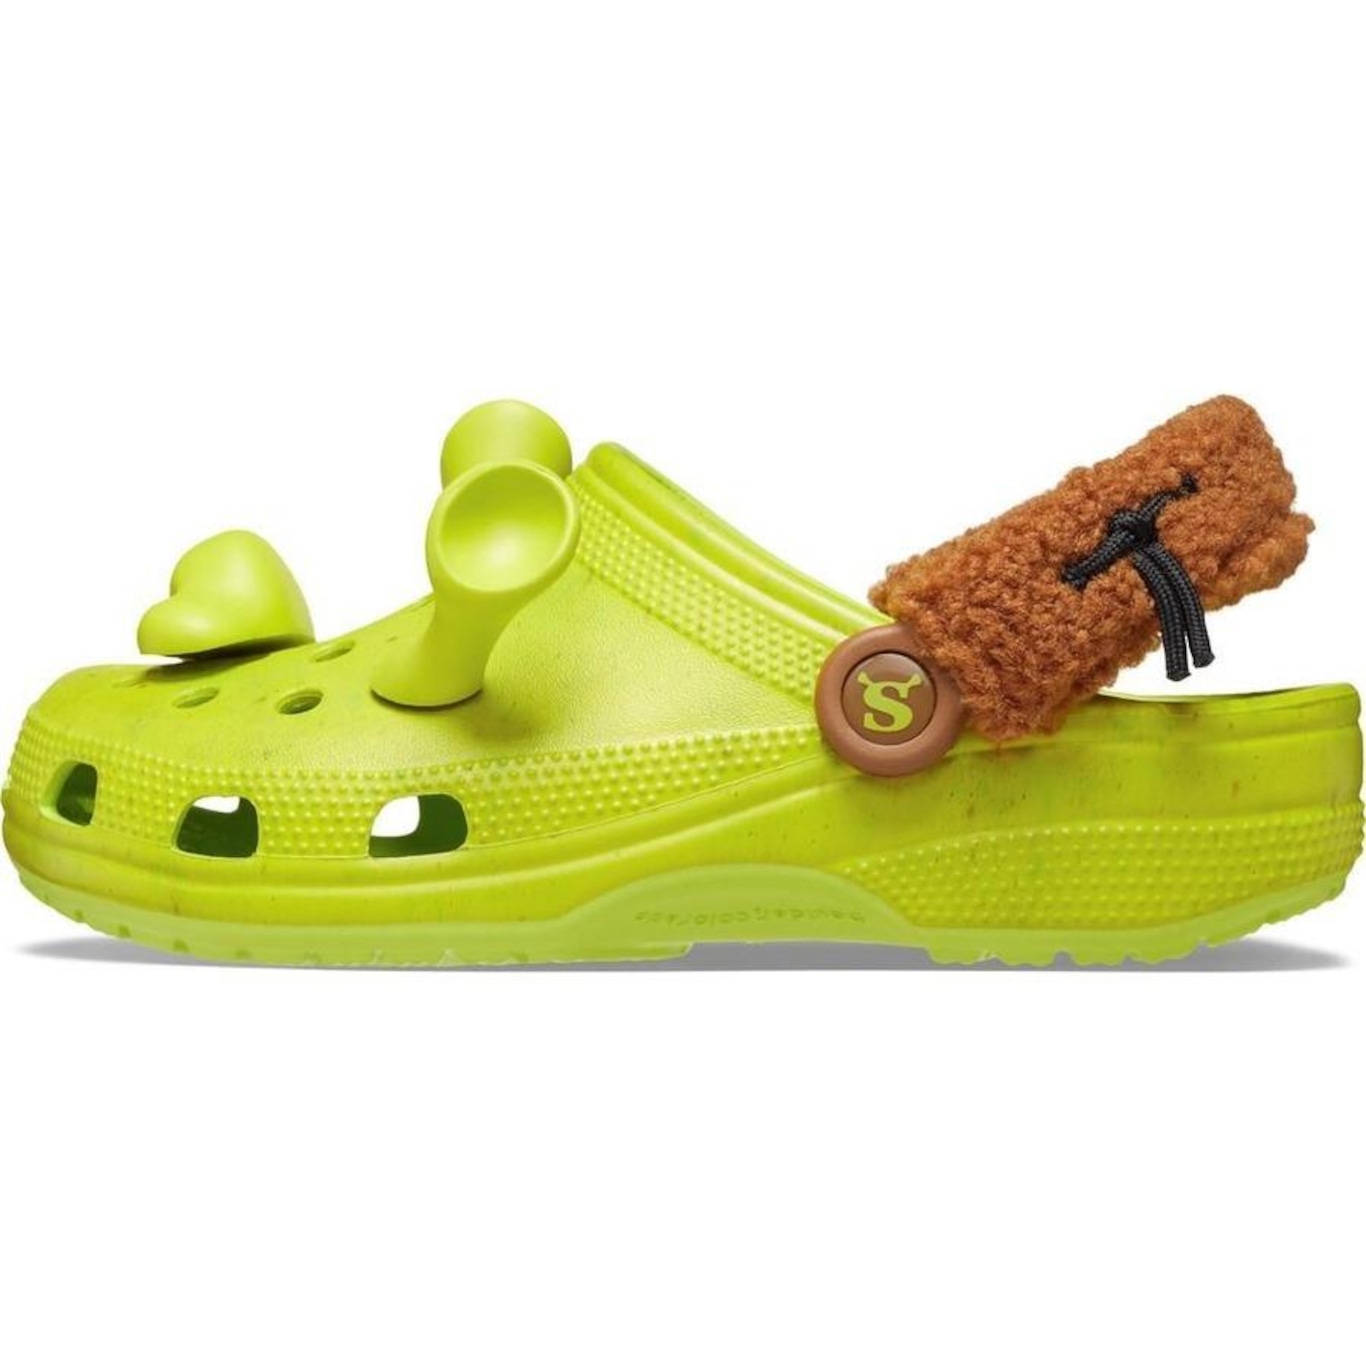 Crocs anuncia sandália de Shrek - EP GRUPO